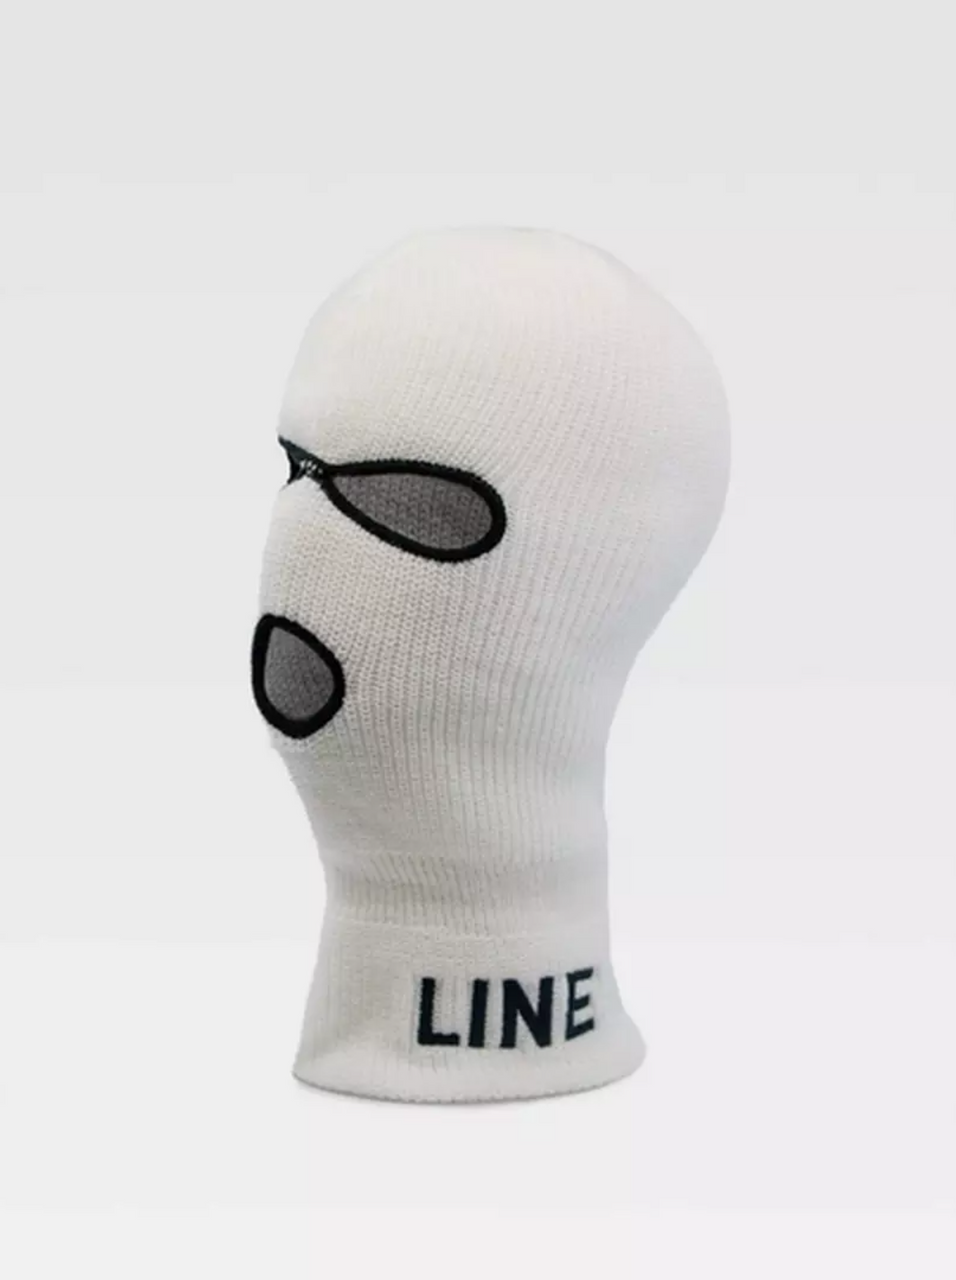 Ski Masks – Designer Sporty  Ski mask, Designer ski mask, Skiing